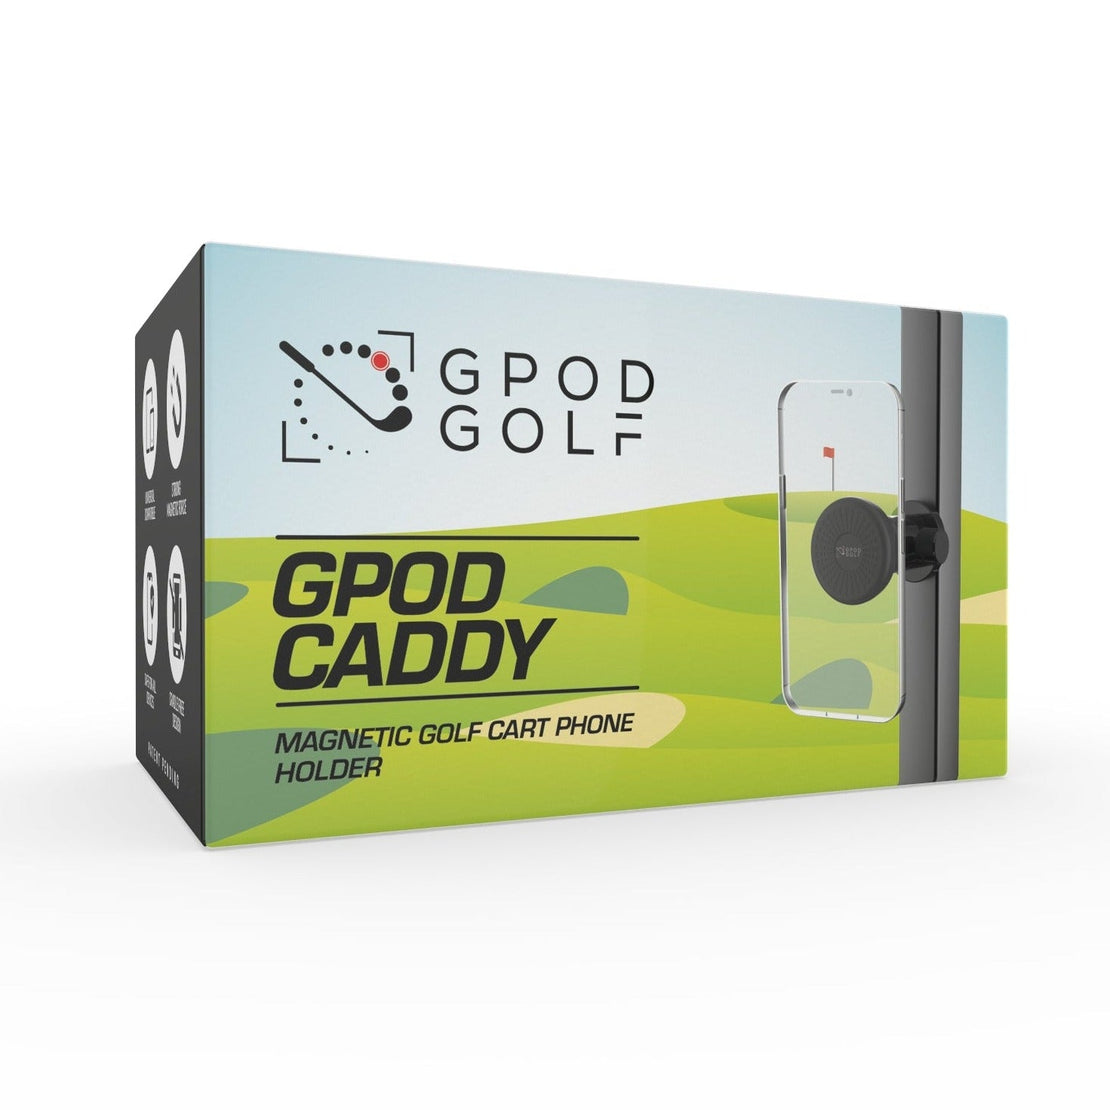 GPOD GOLF Gpod Caddy Magnetic golf cart phone holder packaging